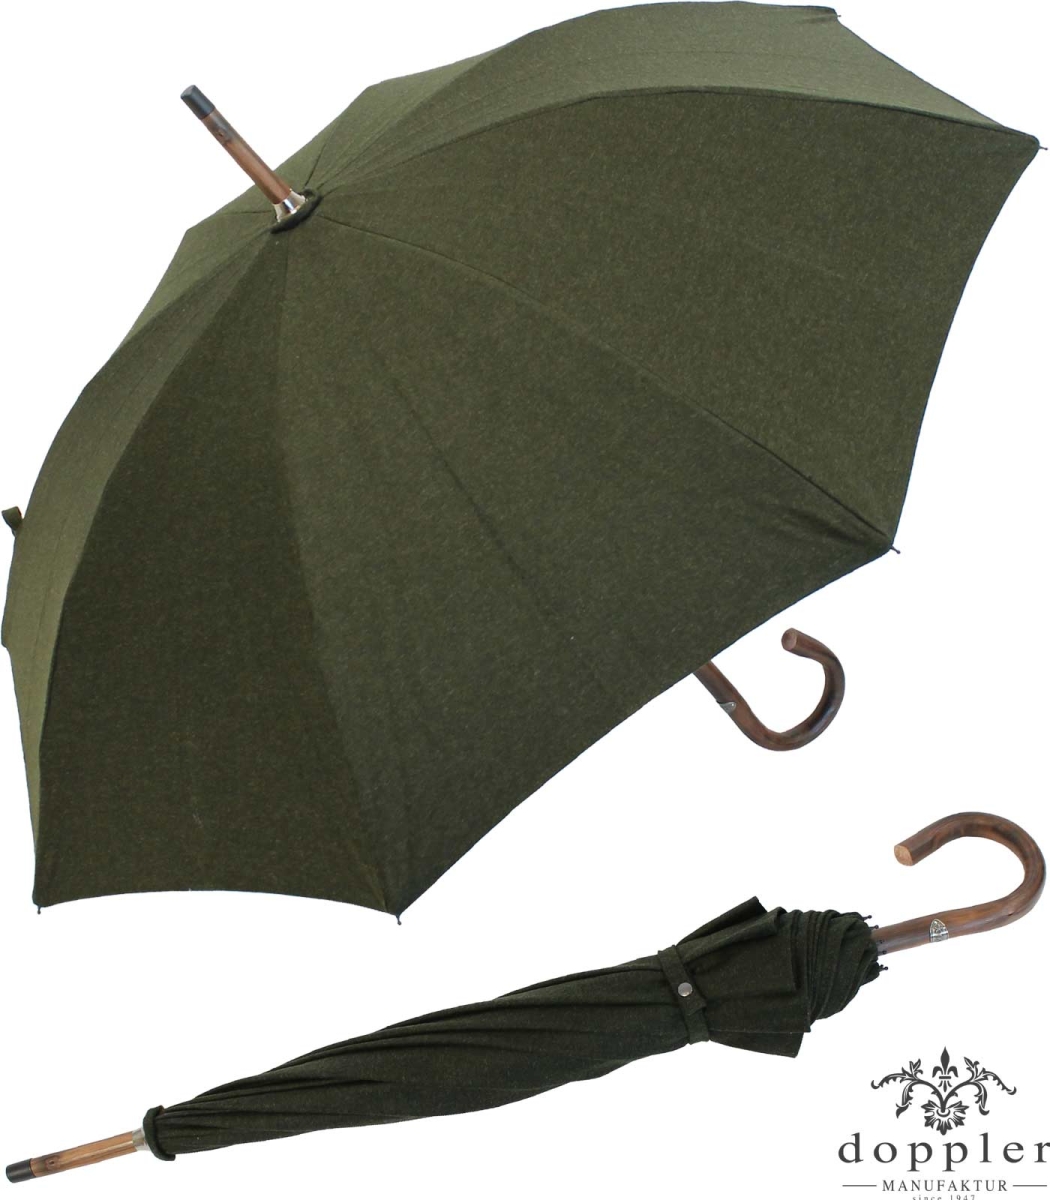 Regenschirm Doppler Kastanie Loden 259,00 - Steirer € dunkelgrün